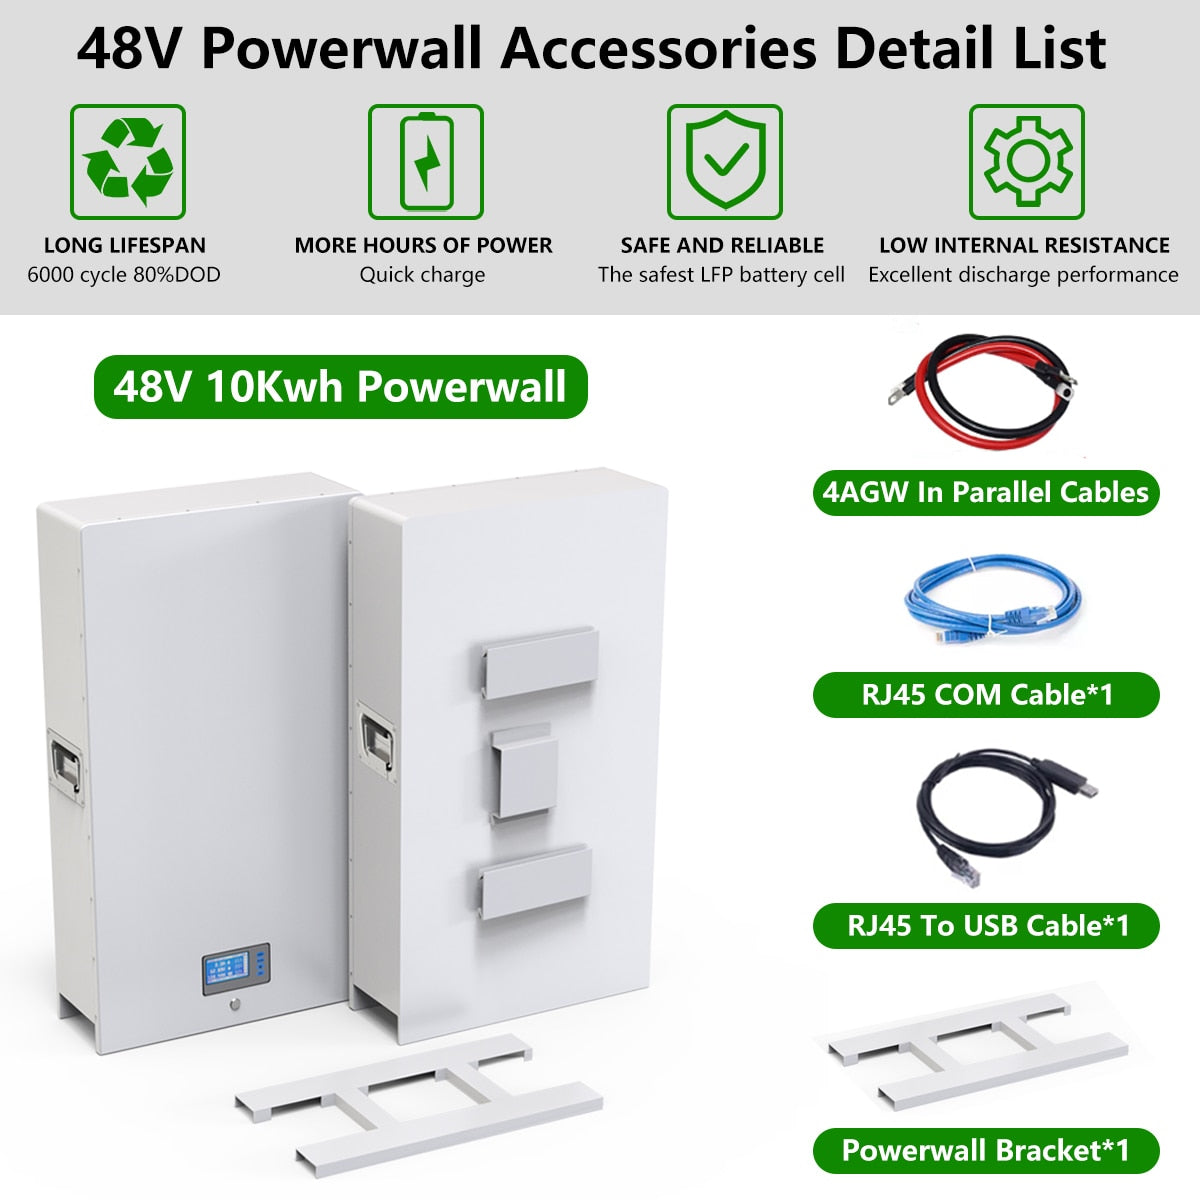 48V Powerwall Accessories Detail List LONG LIFESPAN MORE